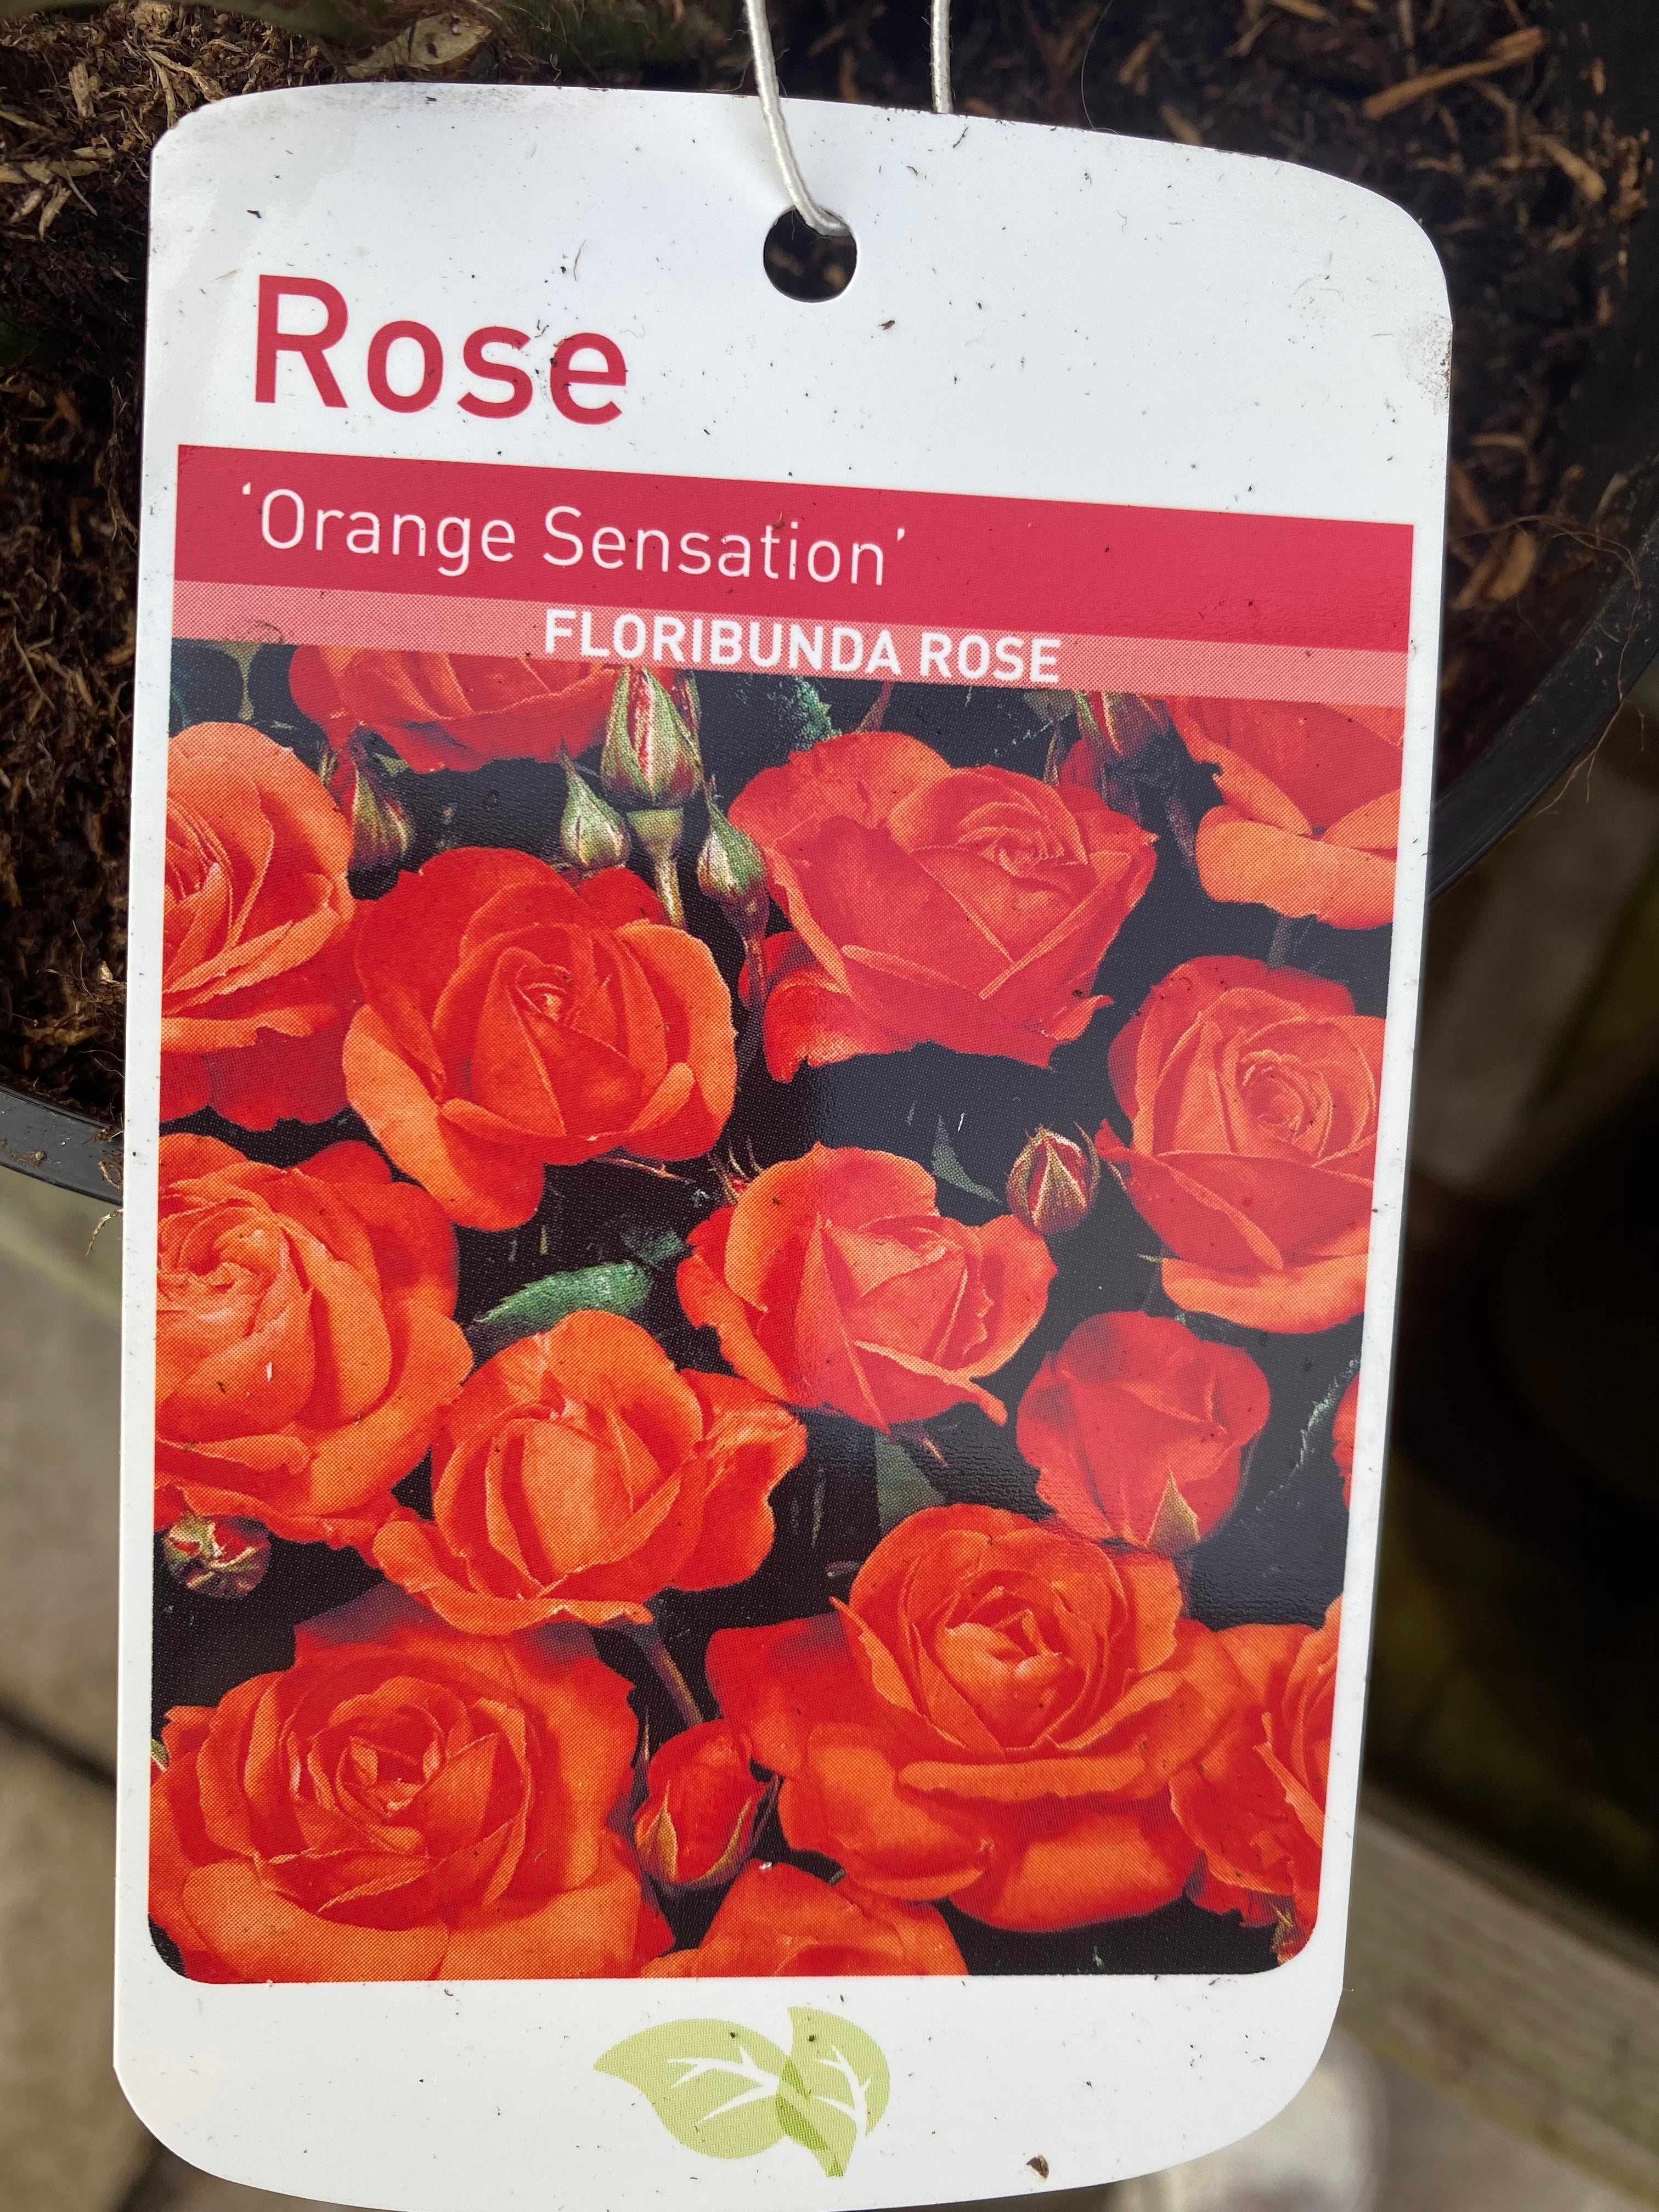 Rose “Orange Sensation”